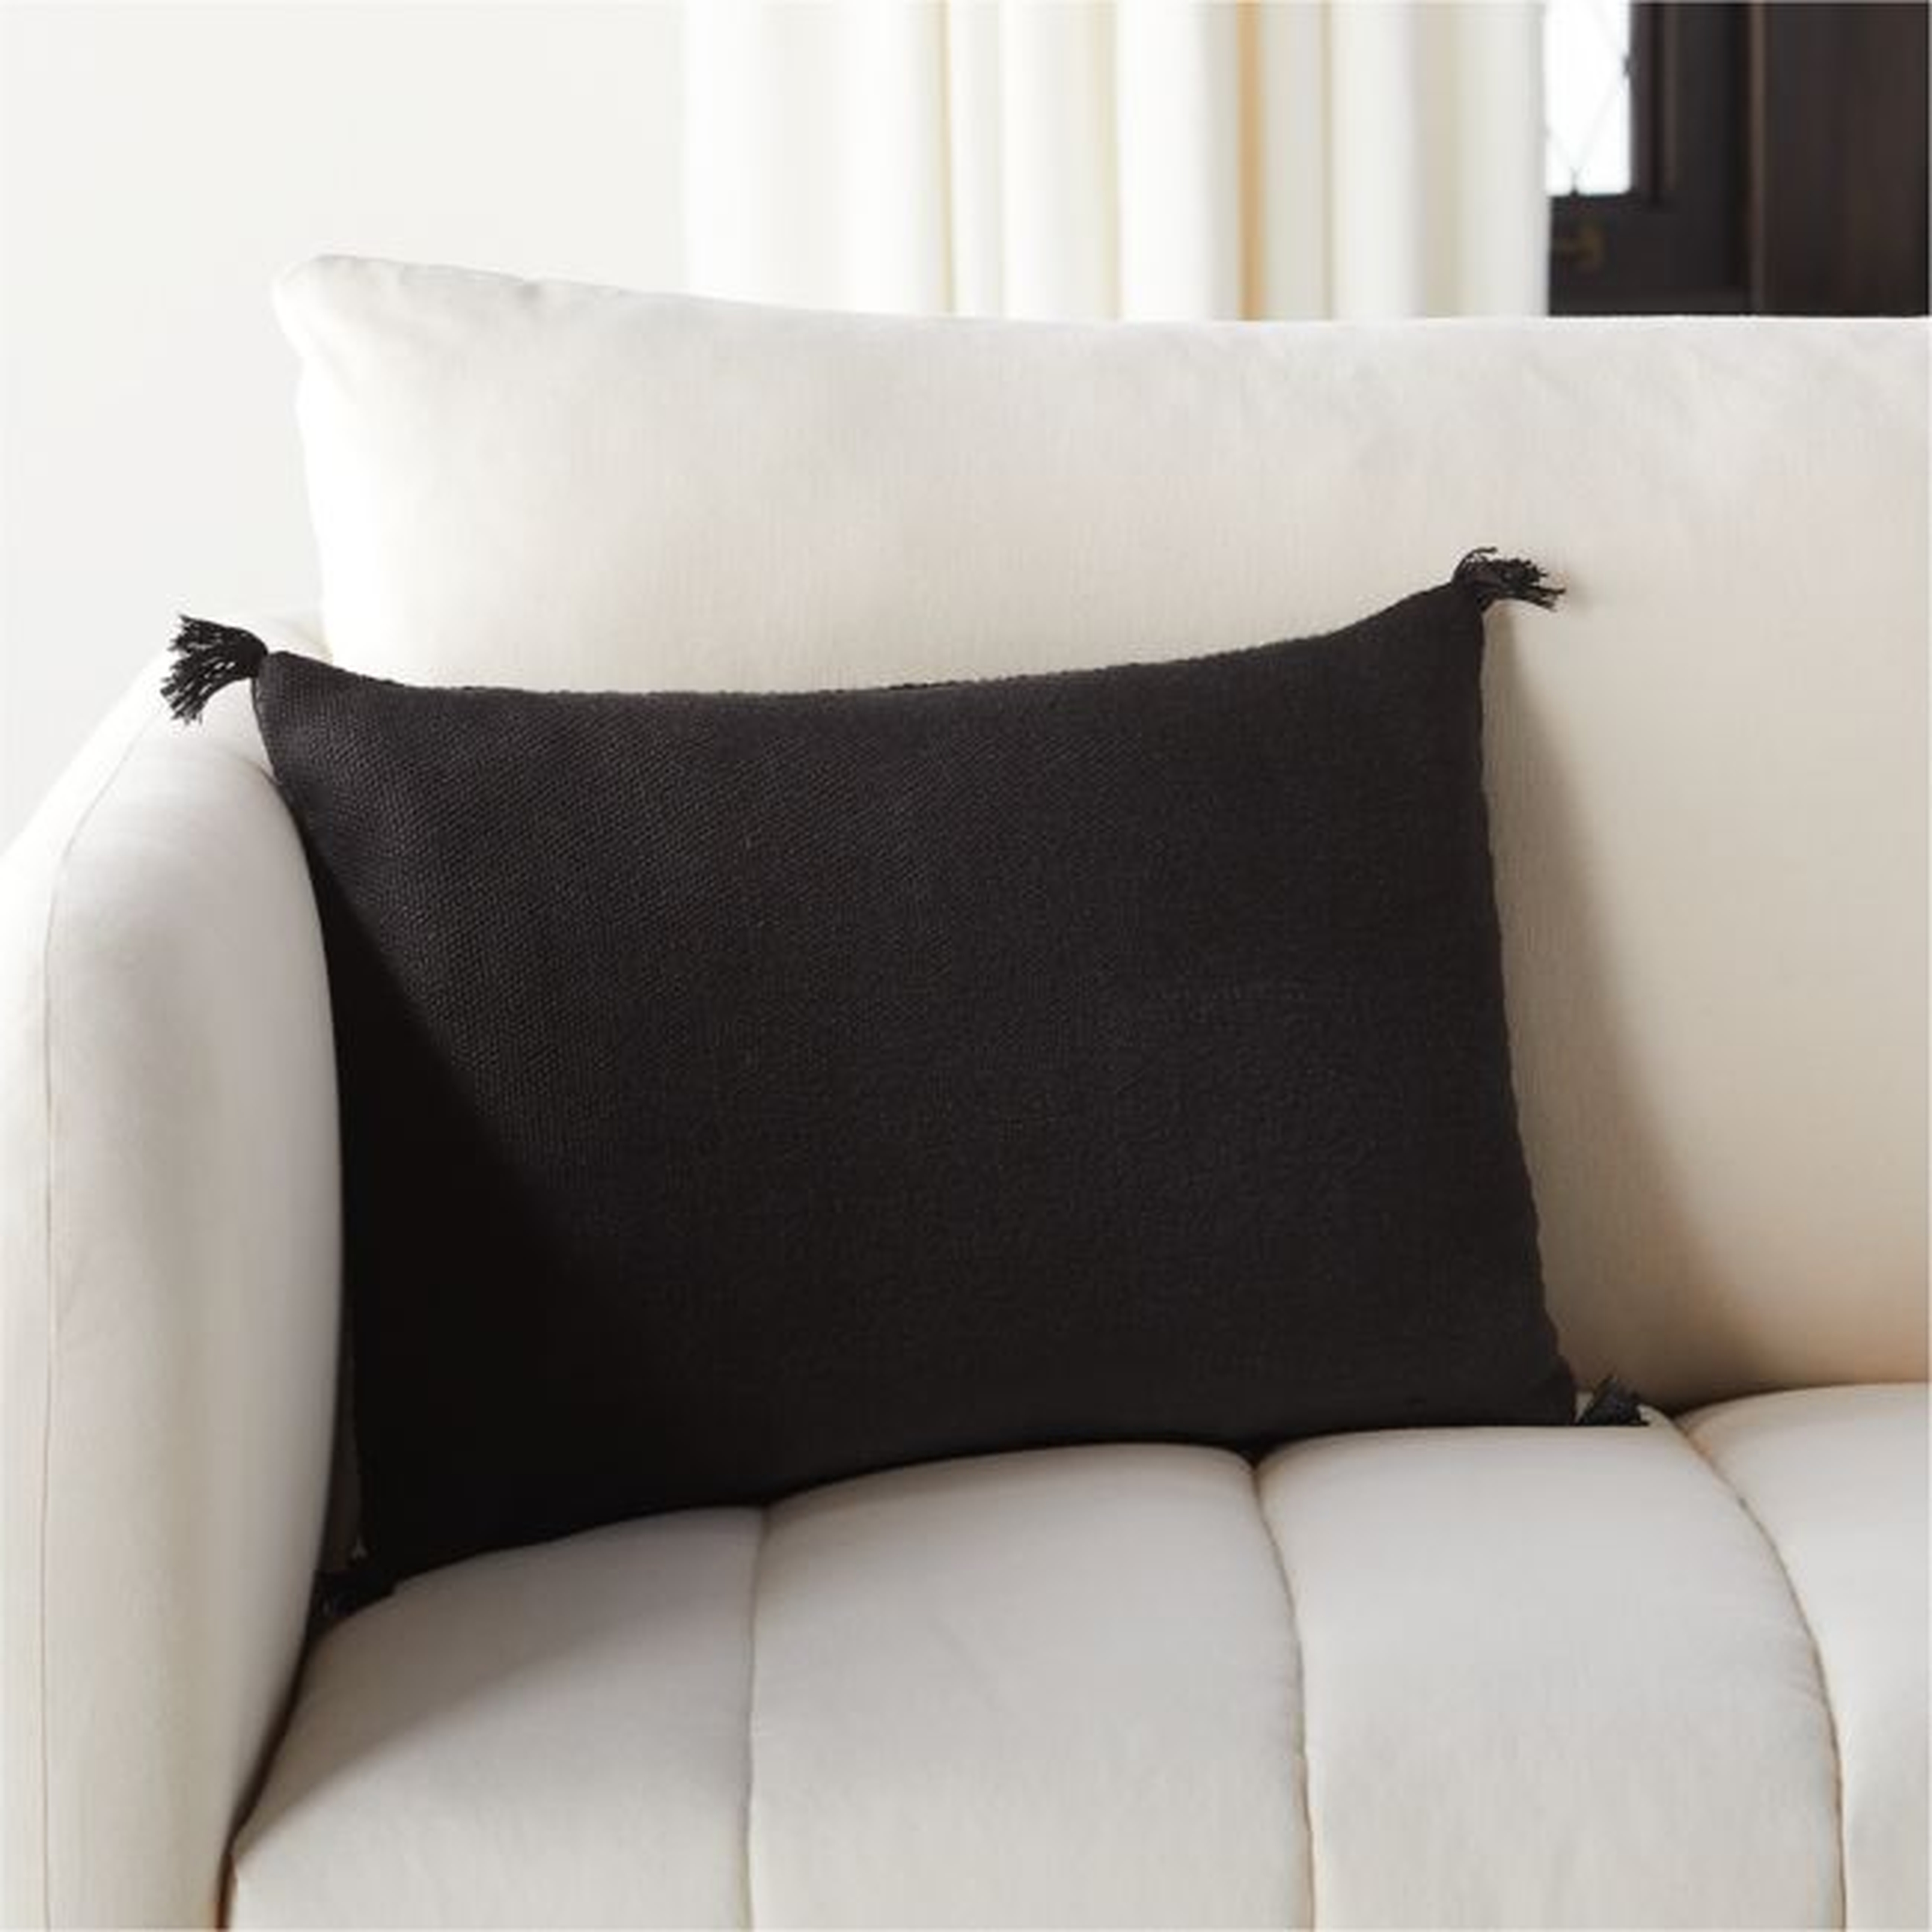 18"x12" Plait Black Pillow with Down-Alternative Insert - CB2